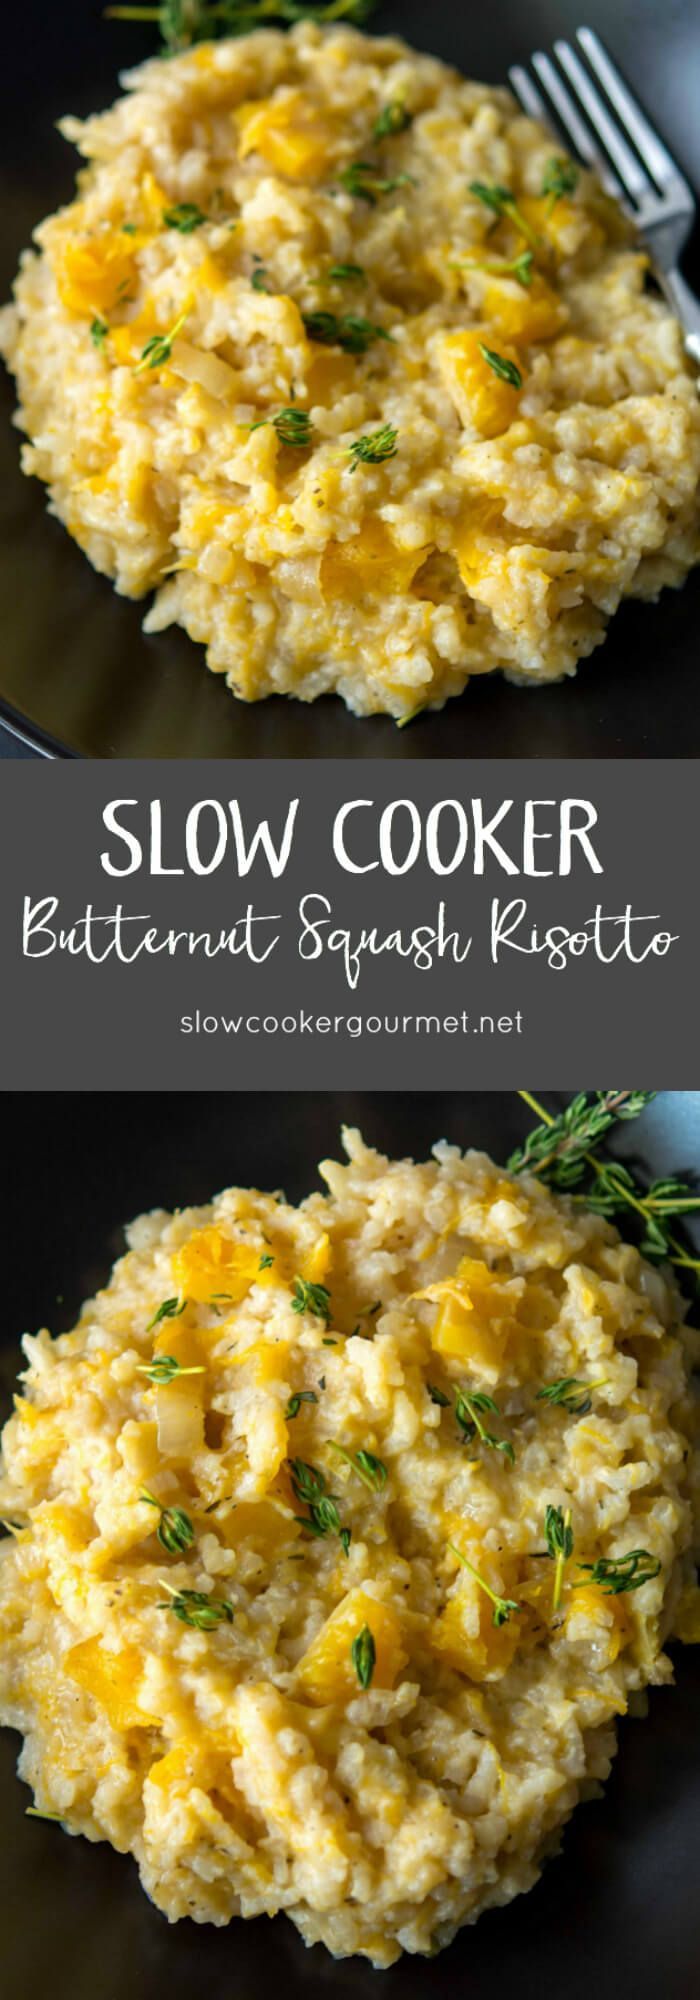 scg-butternut-squash-risotto-longpin -   17 vegetable recipes slow cooker
 ideas